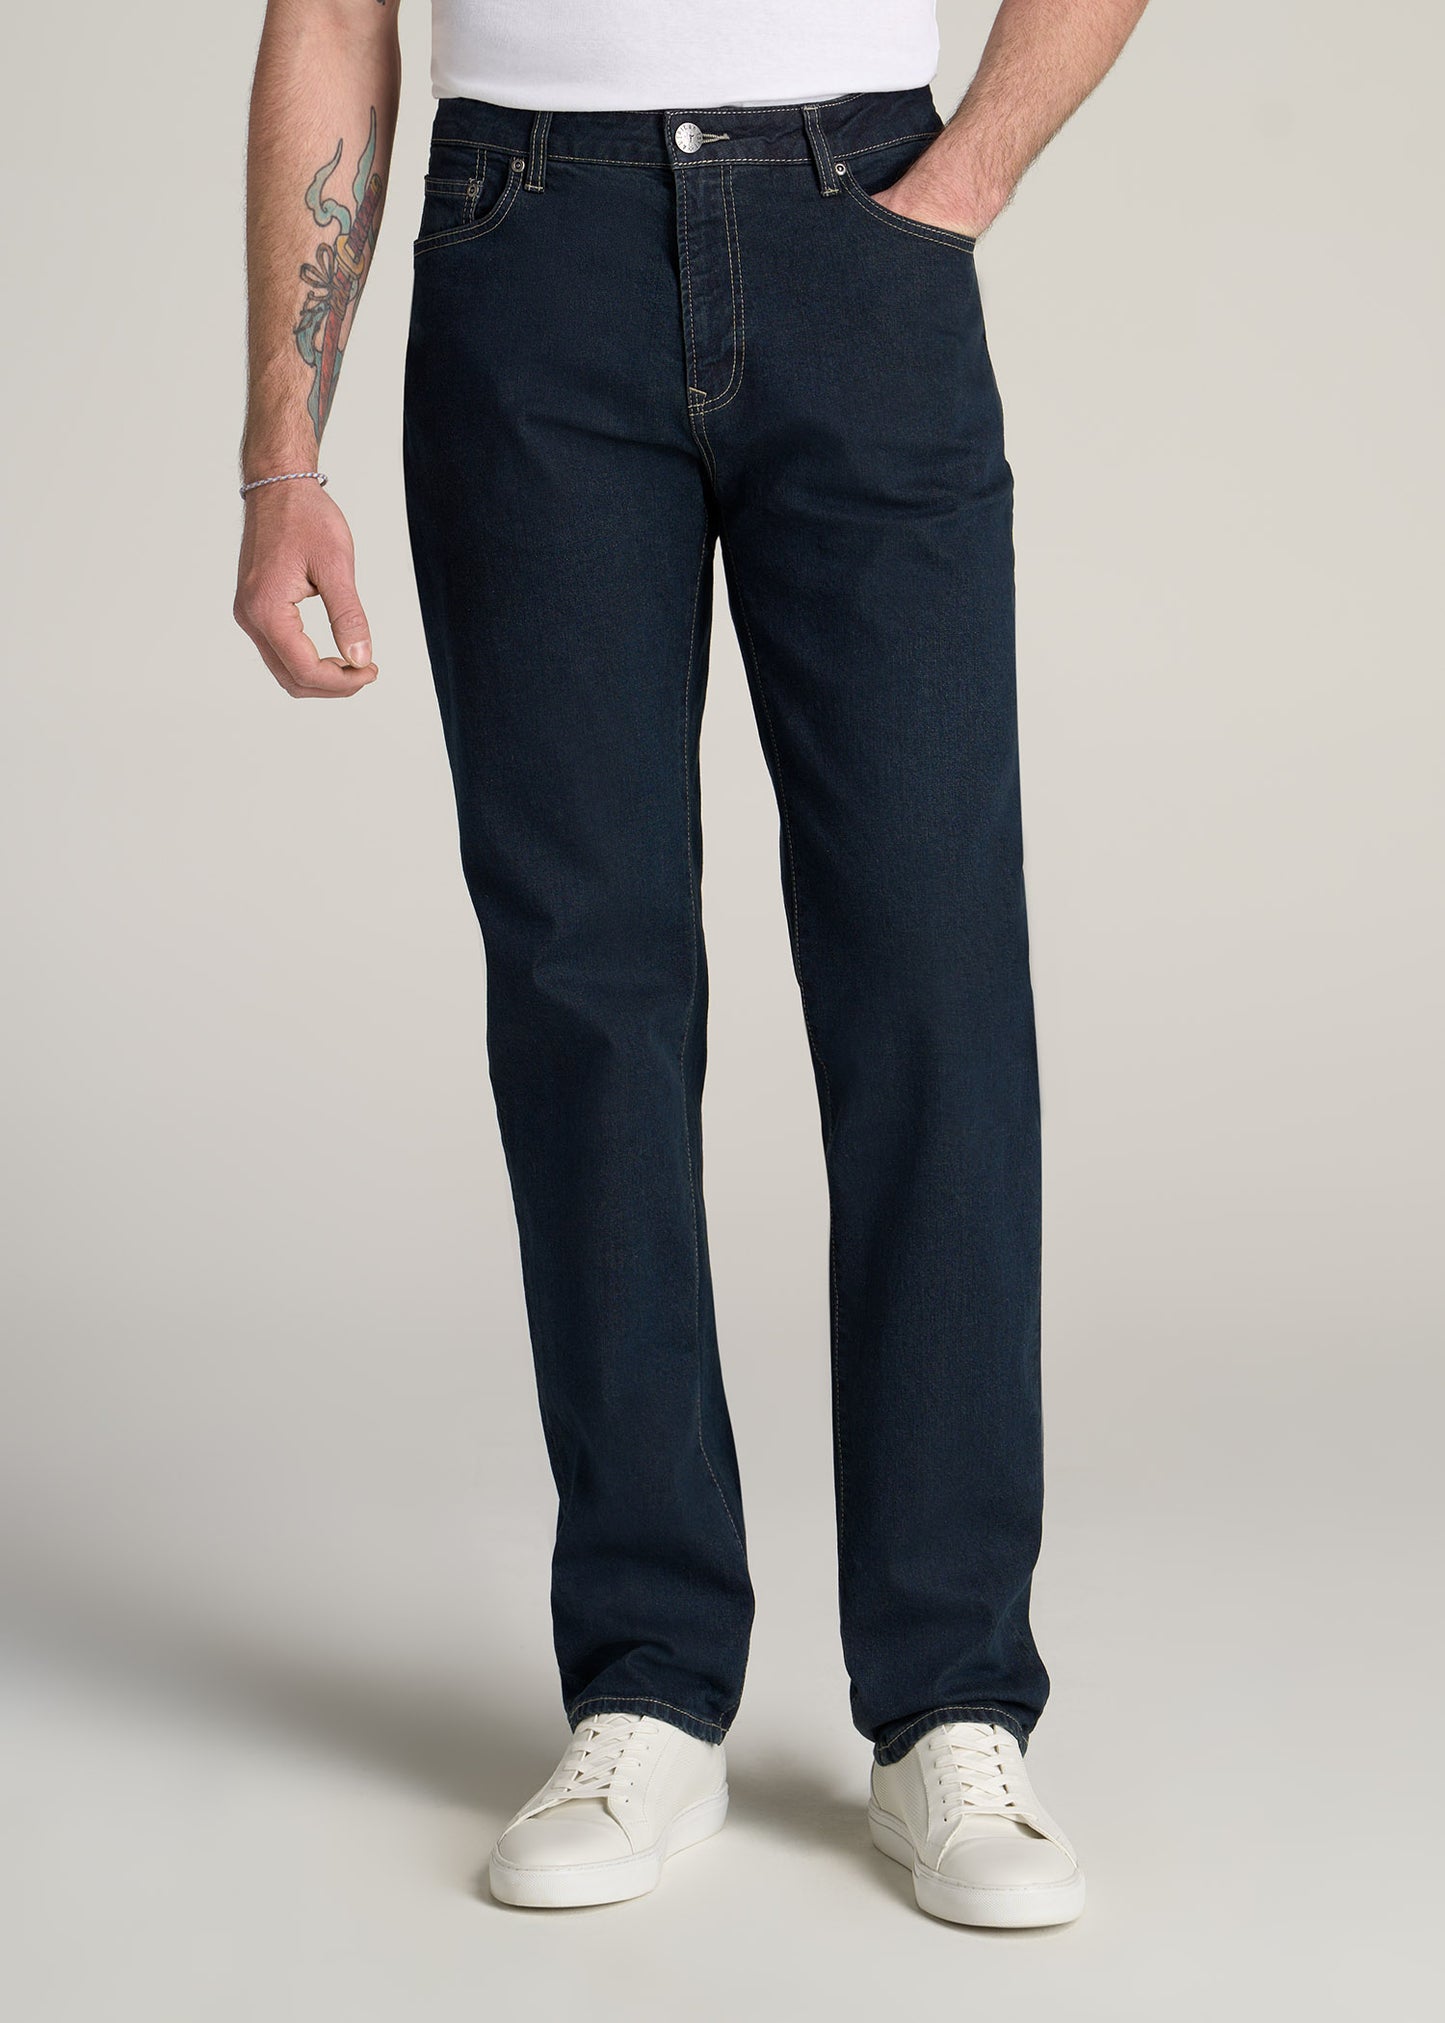 American-Tall-Men-Mason-SEMI-RELAXED-Jeans-Dark-Rinse-front